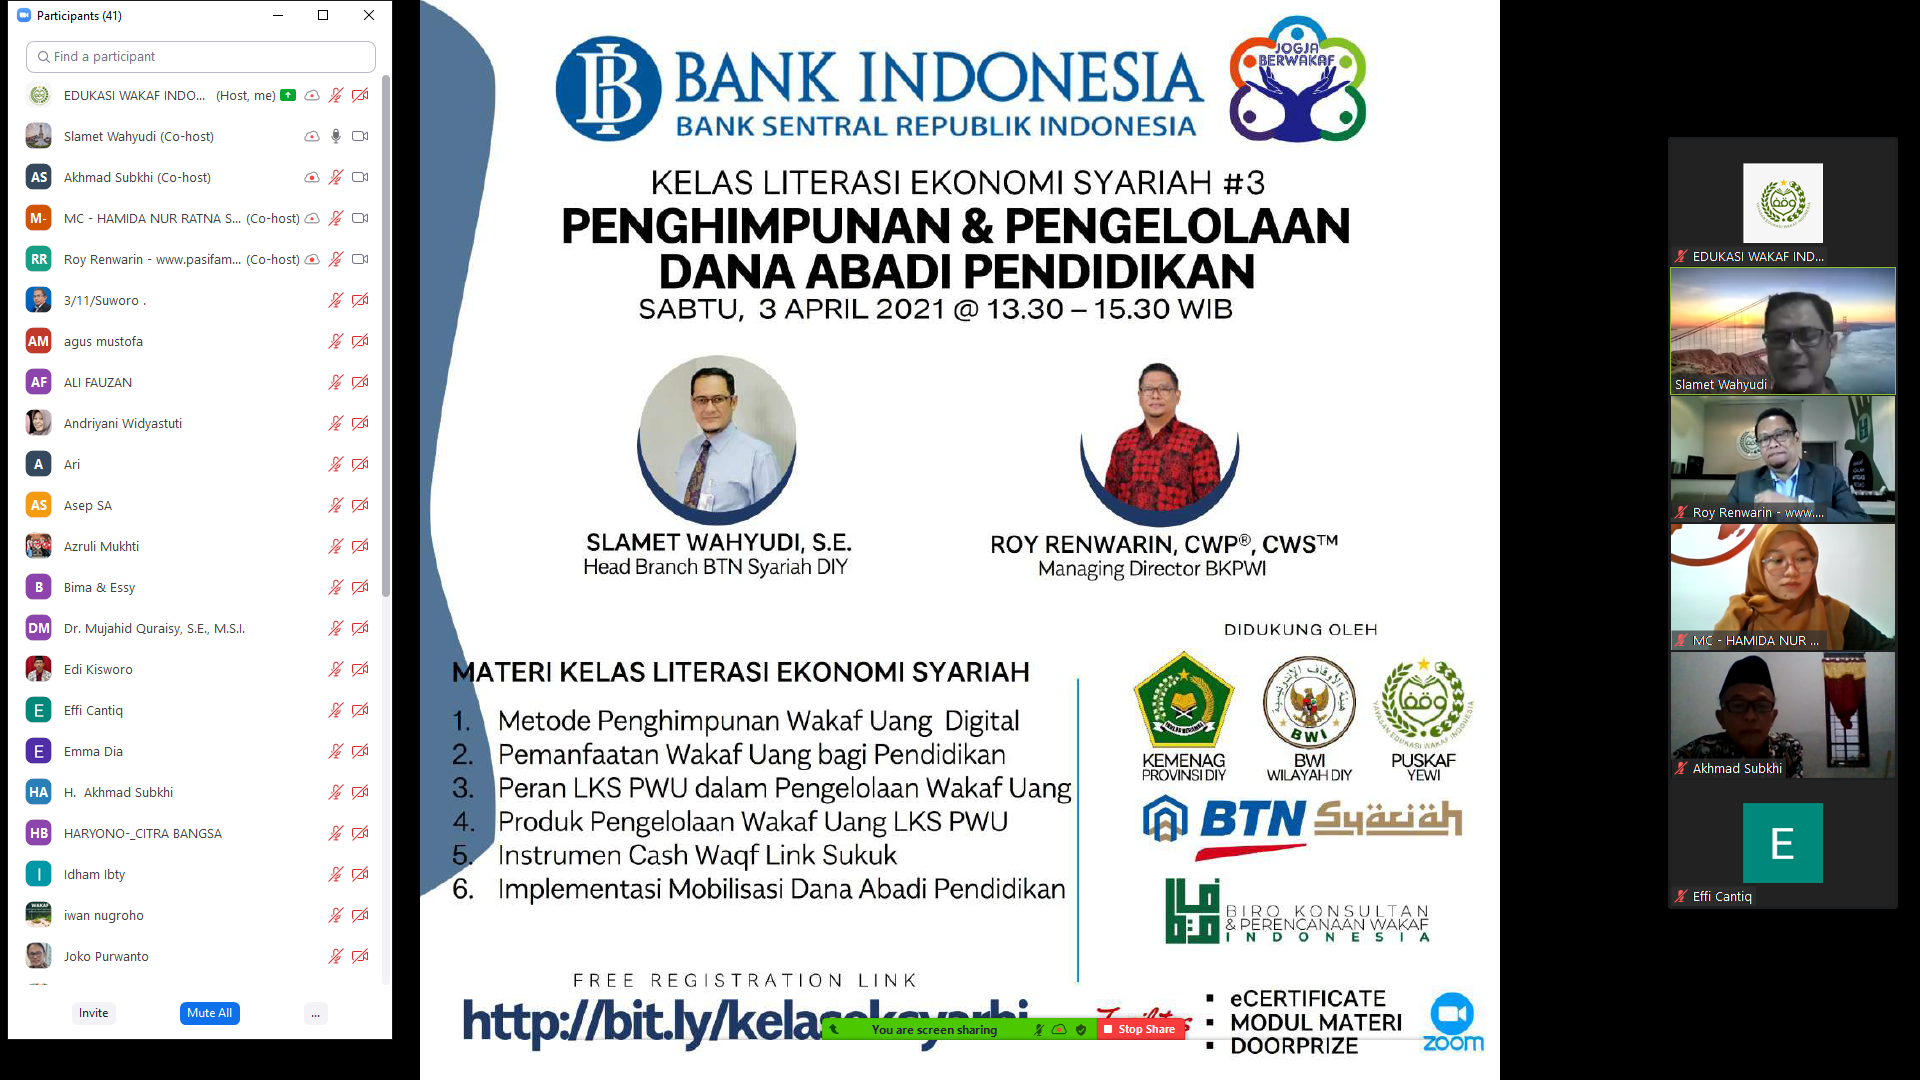 KELAS LITERASI EKONOMI SYARIAH BANK INDONESIA 3 – PENGHIMPUNAN & PENGELOLAAN DANA ABADI PENDIDIKAN